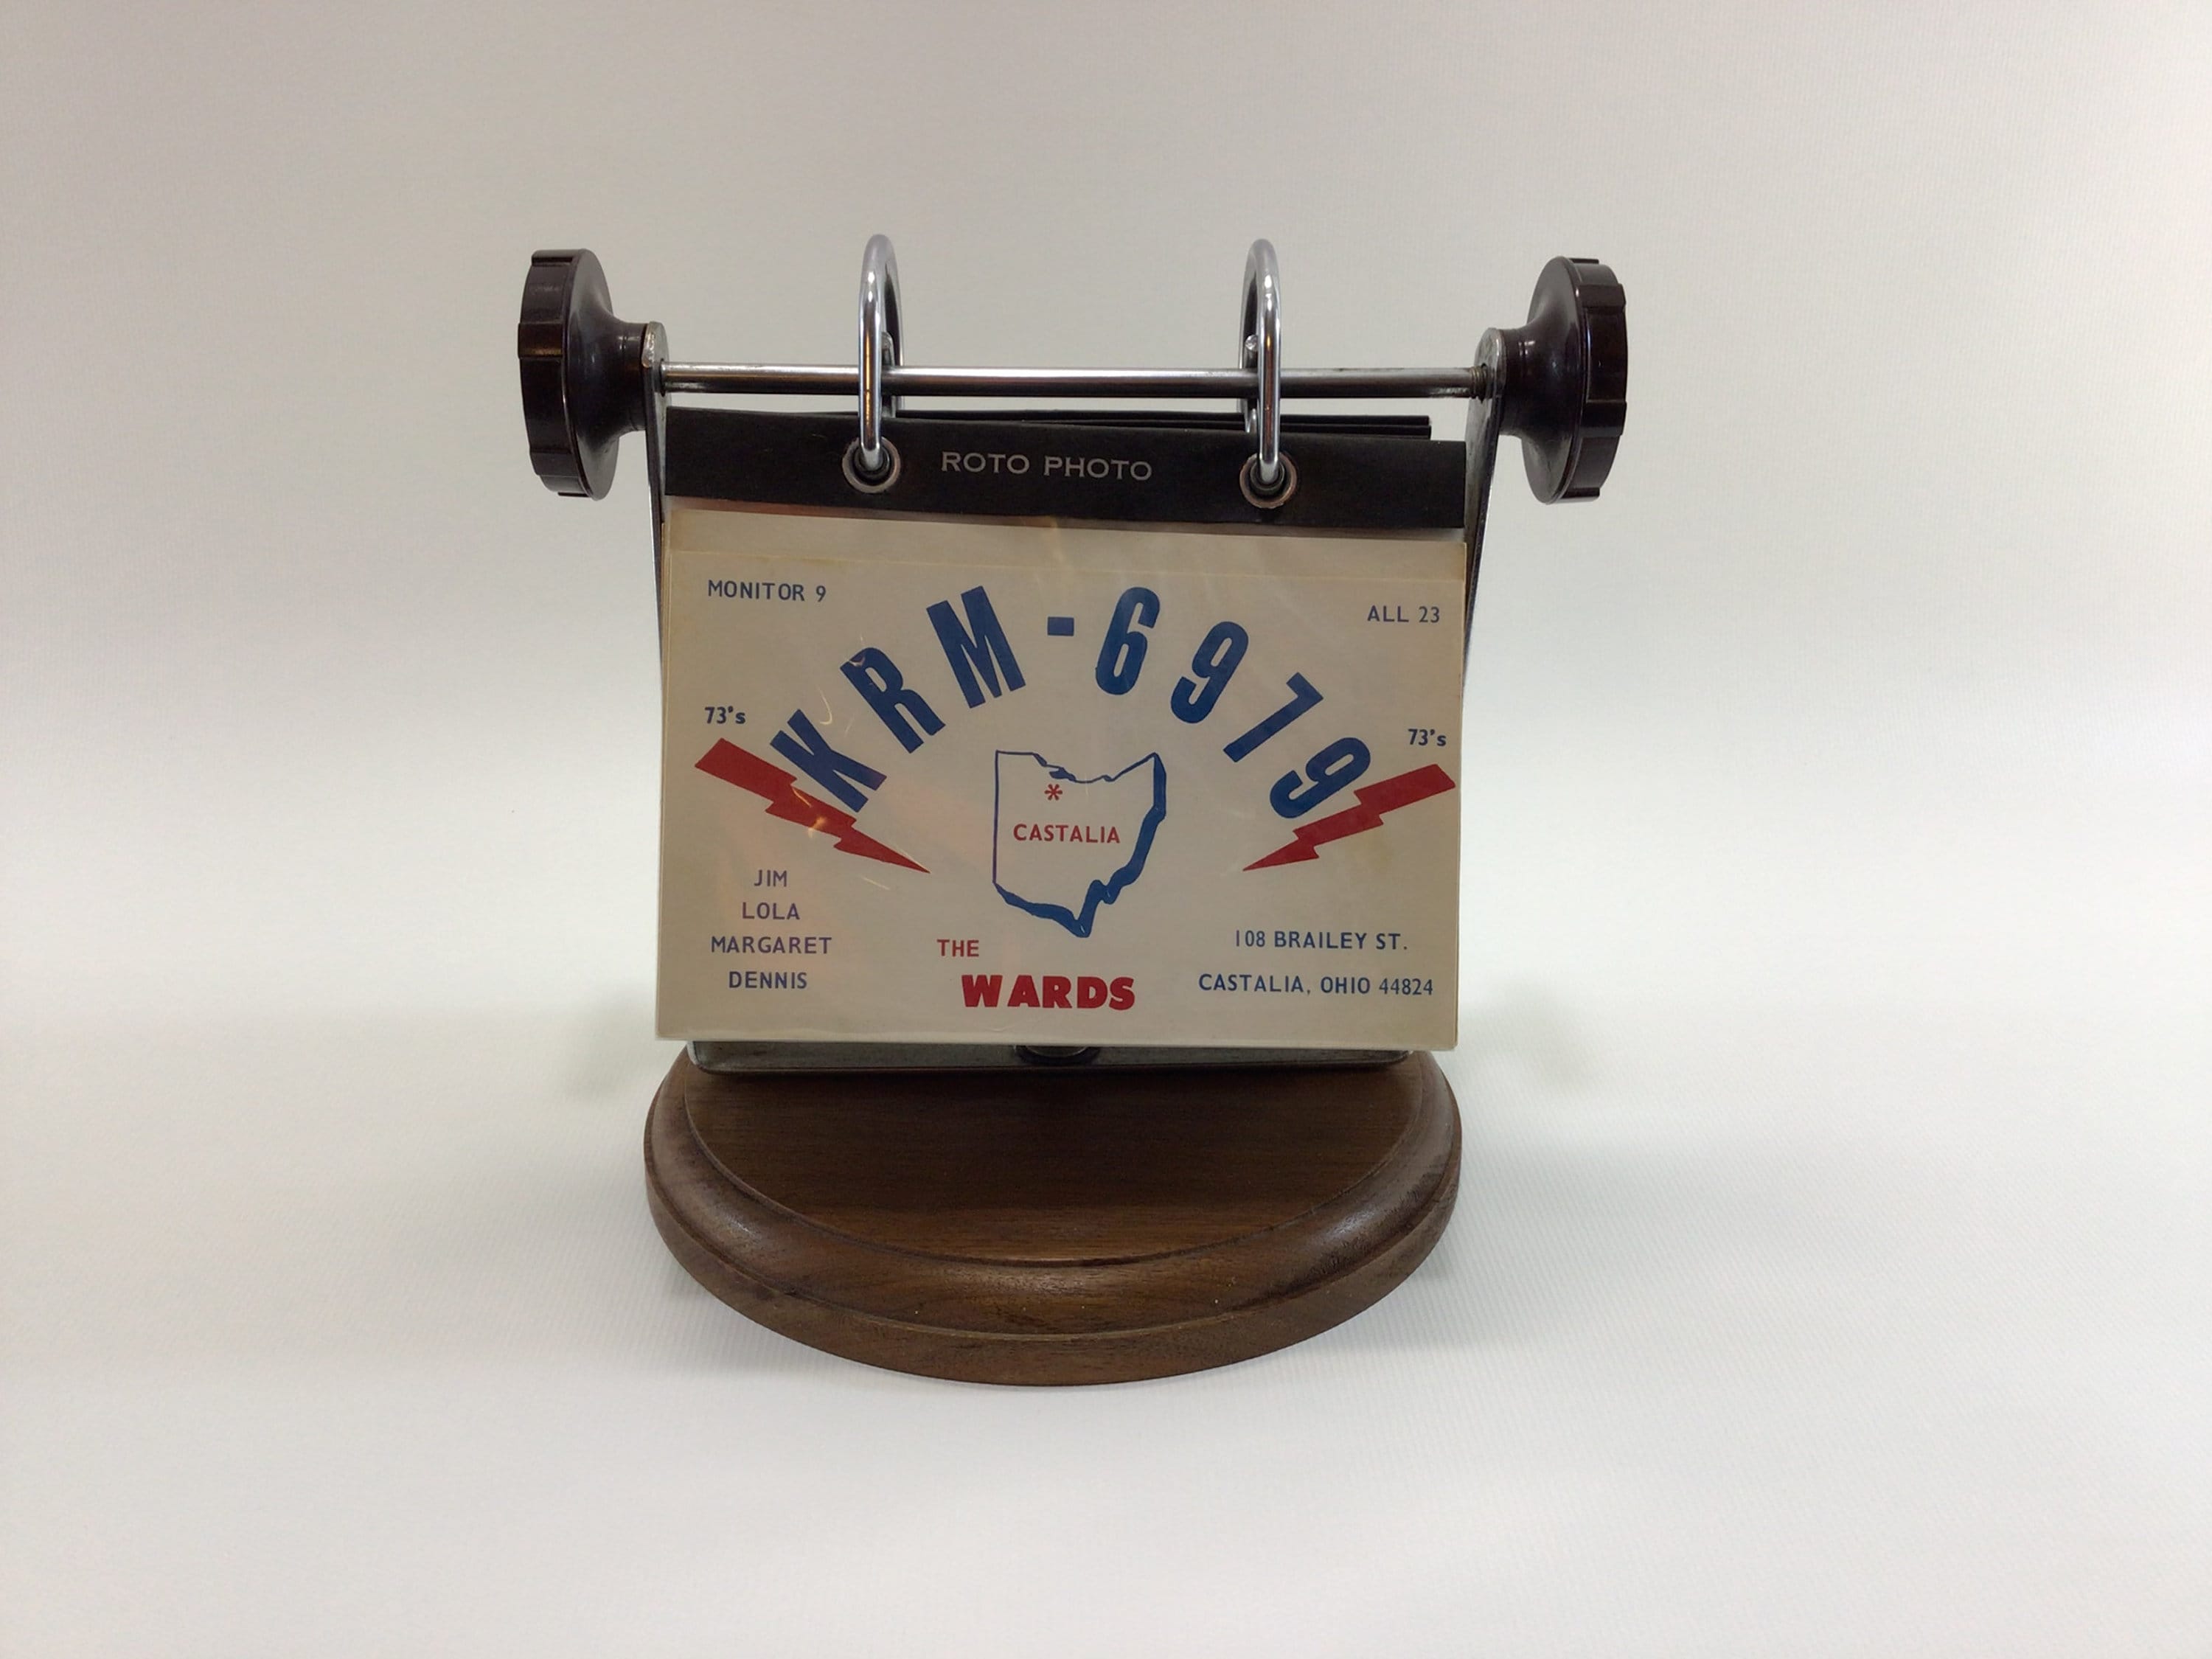 HAM Radio QSL Cards Collection in Vintage Roto Photo Desk